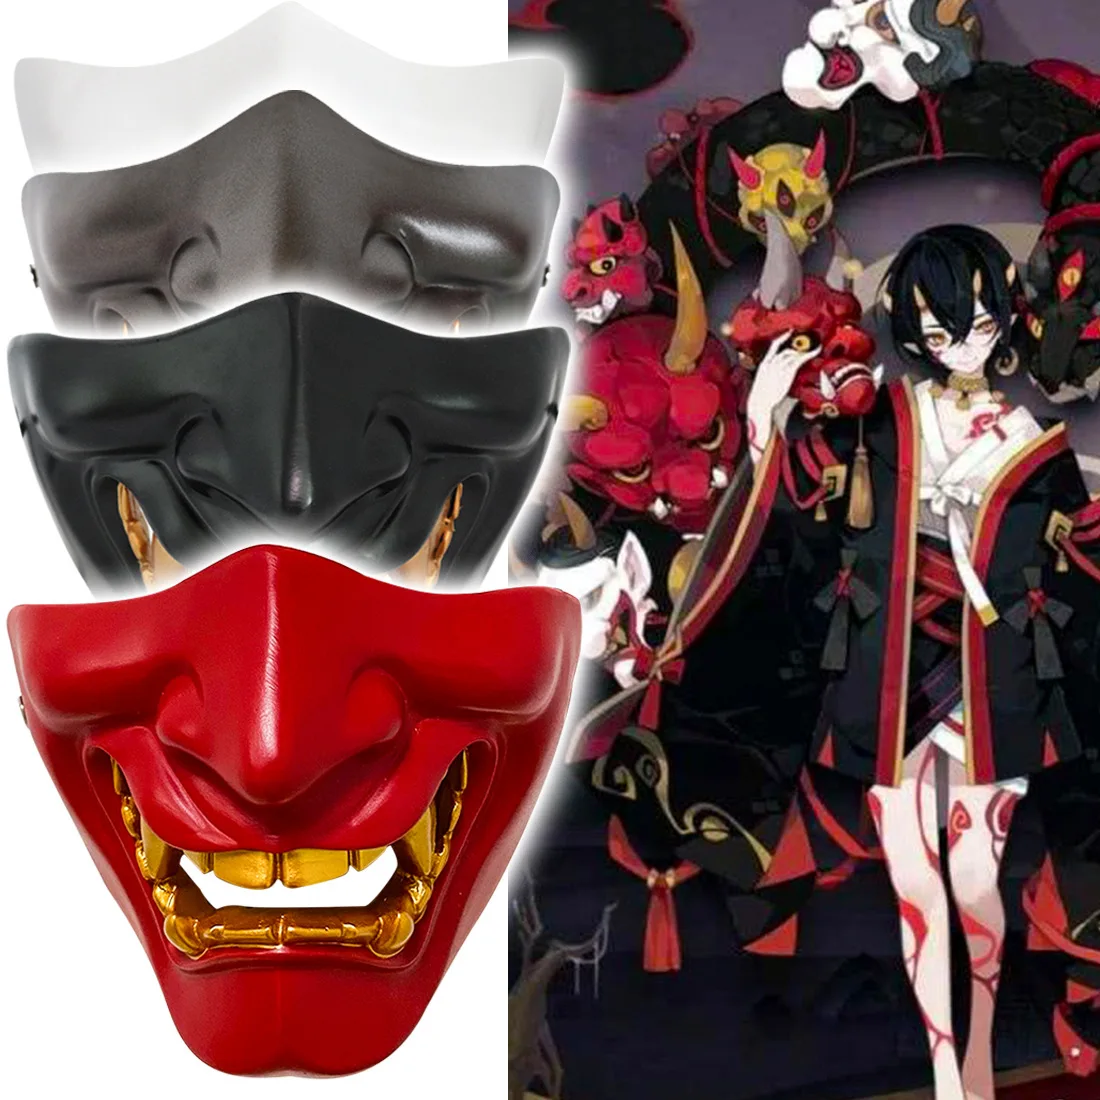 Kосплей Mask Game Half Face Airsoft Oni Mask Halloween маска самур Cosplay Evil Demon Kabuki Samurai Hannya Prajna Resin Cover